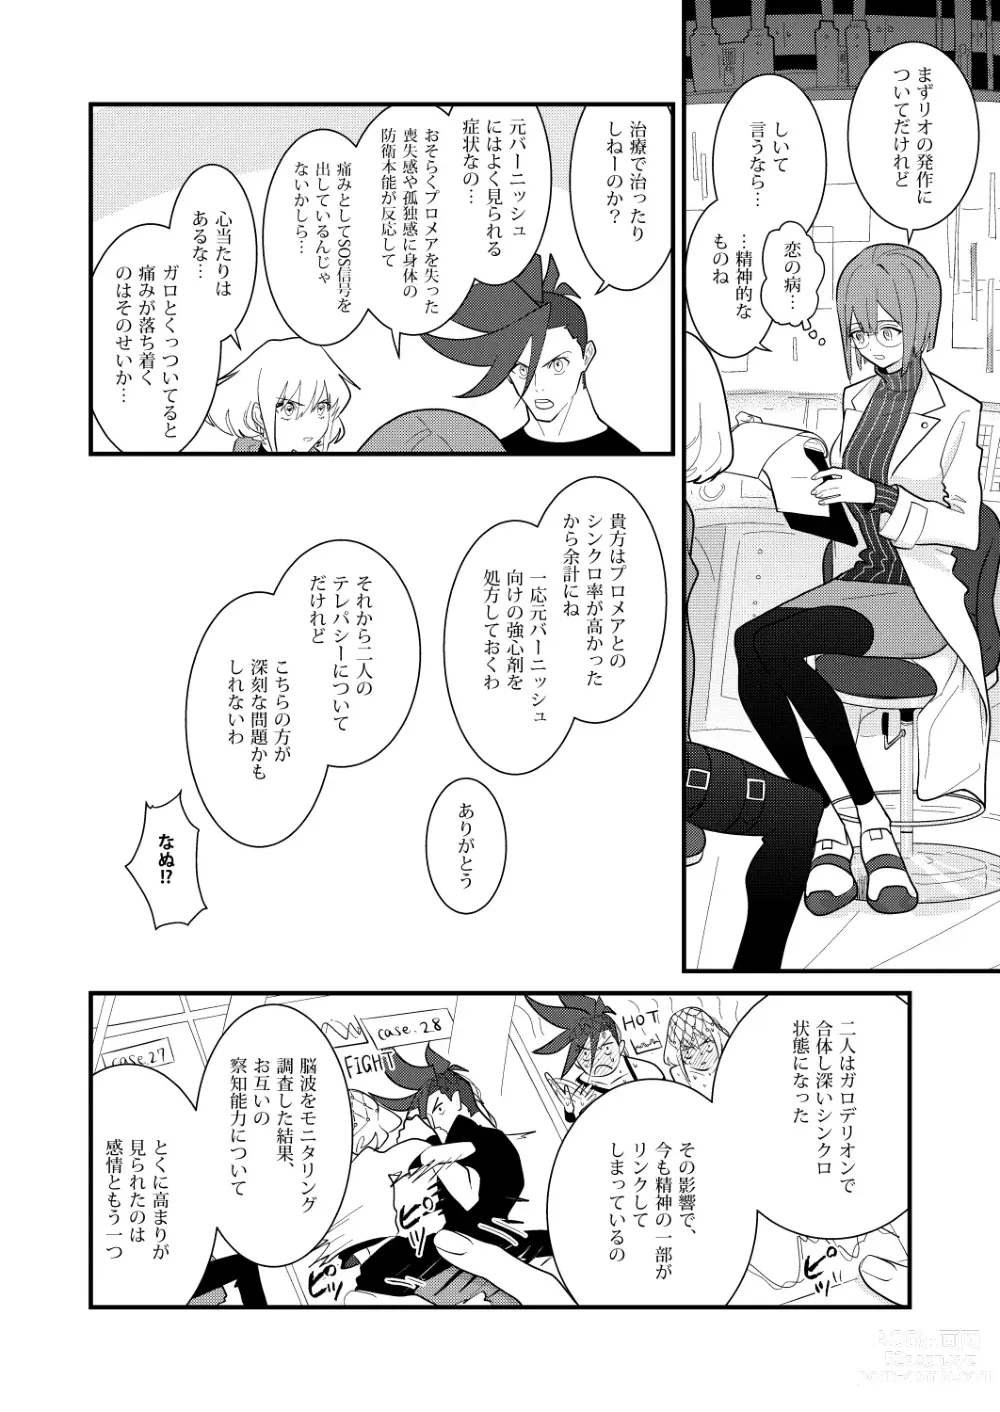 Page 7 of doujinshi Kannou Connect